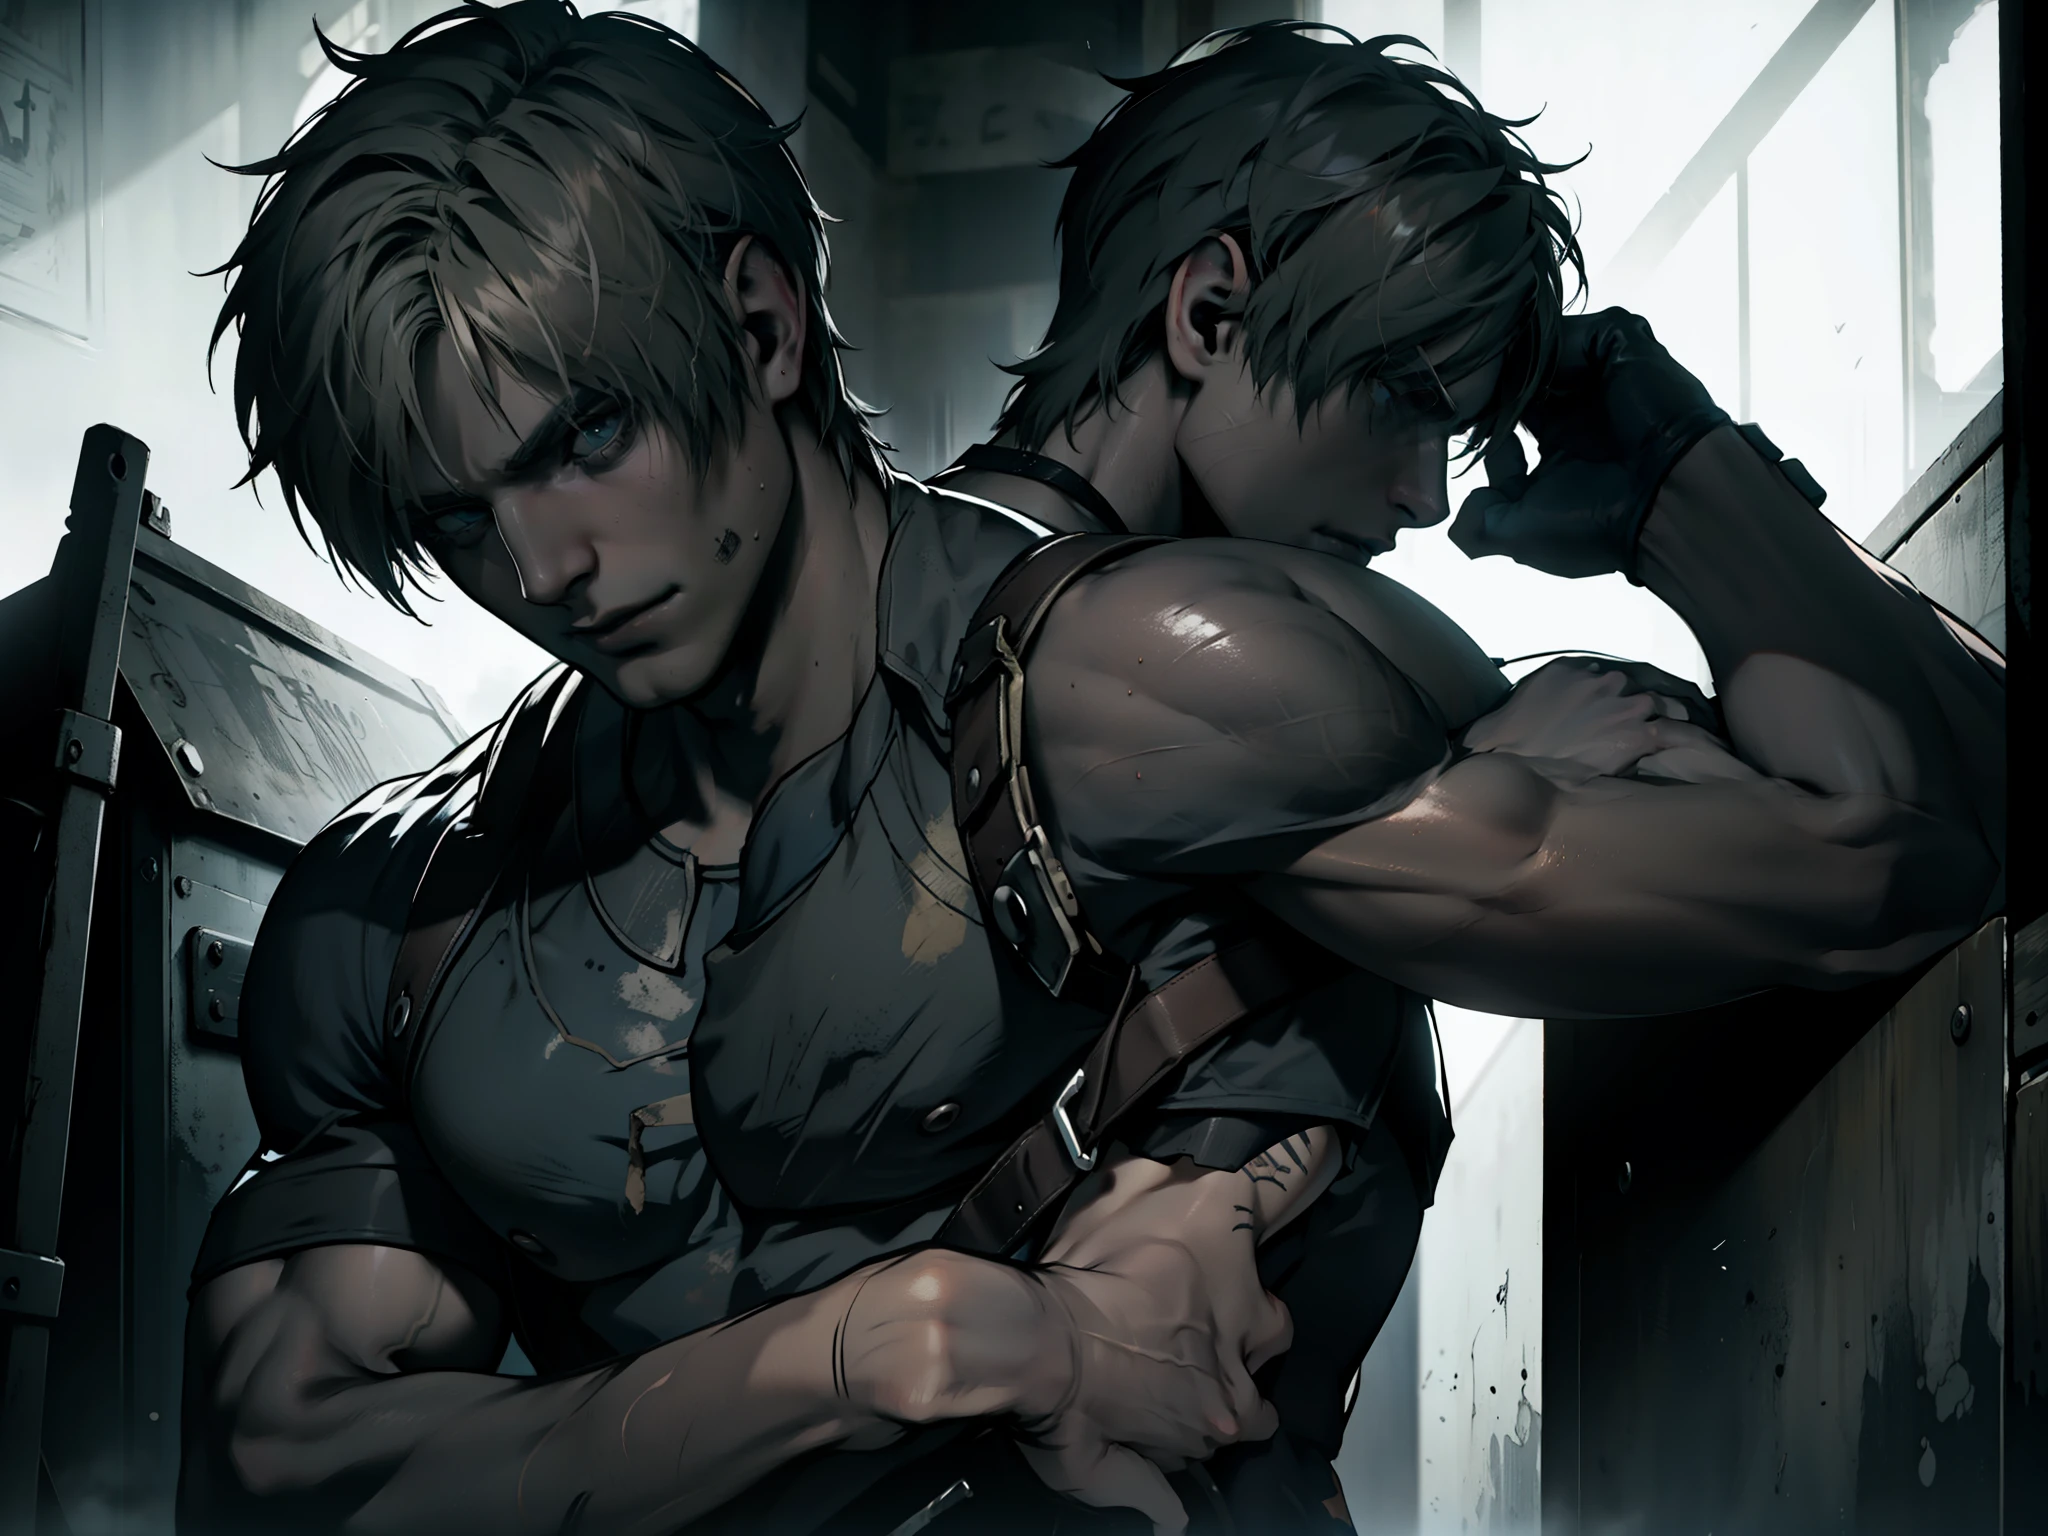 Shirtless Resident Evil Leon in heroic pose